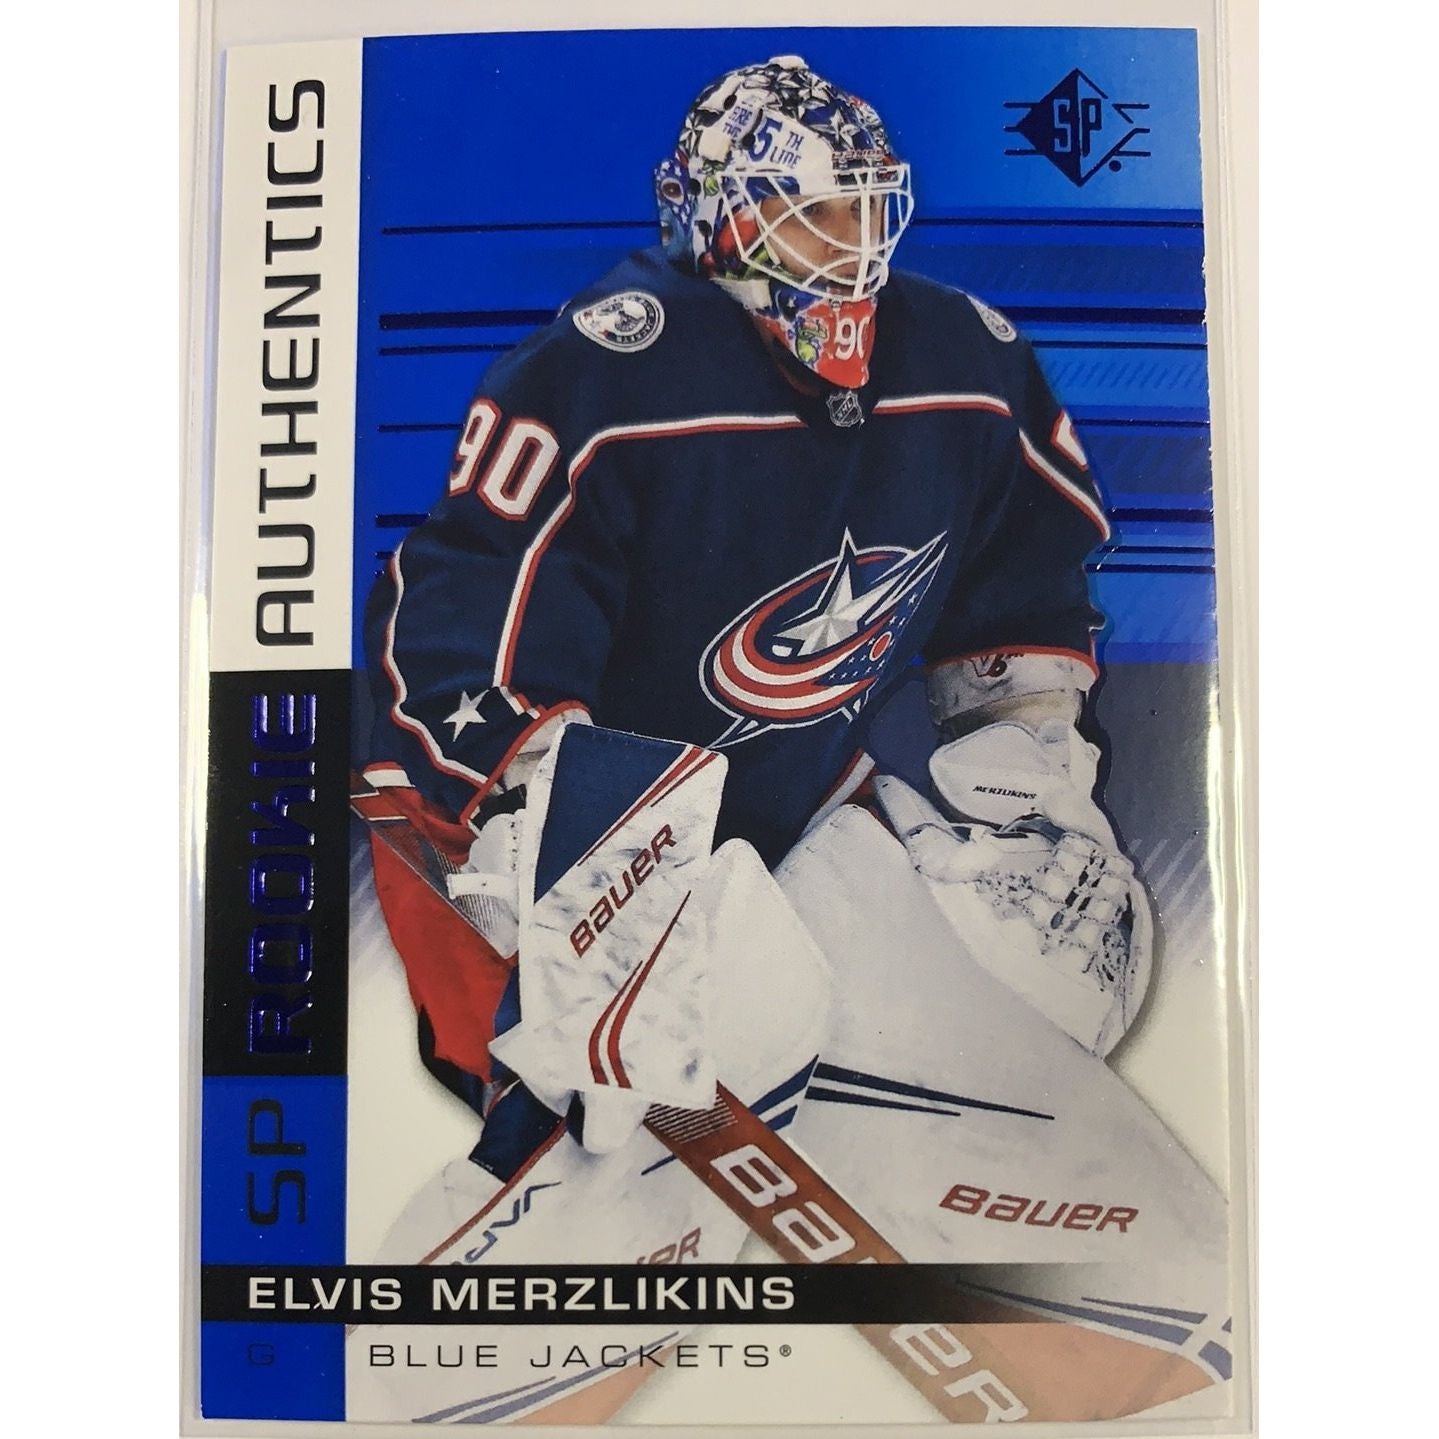  2019-20 SP Elvis Merzlikins Rookie Authentics  Local Legends Cards & Collectibles